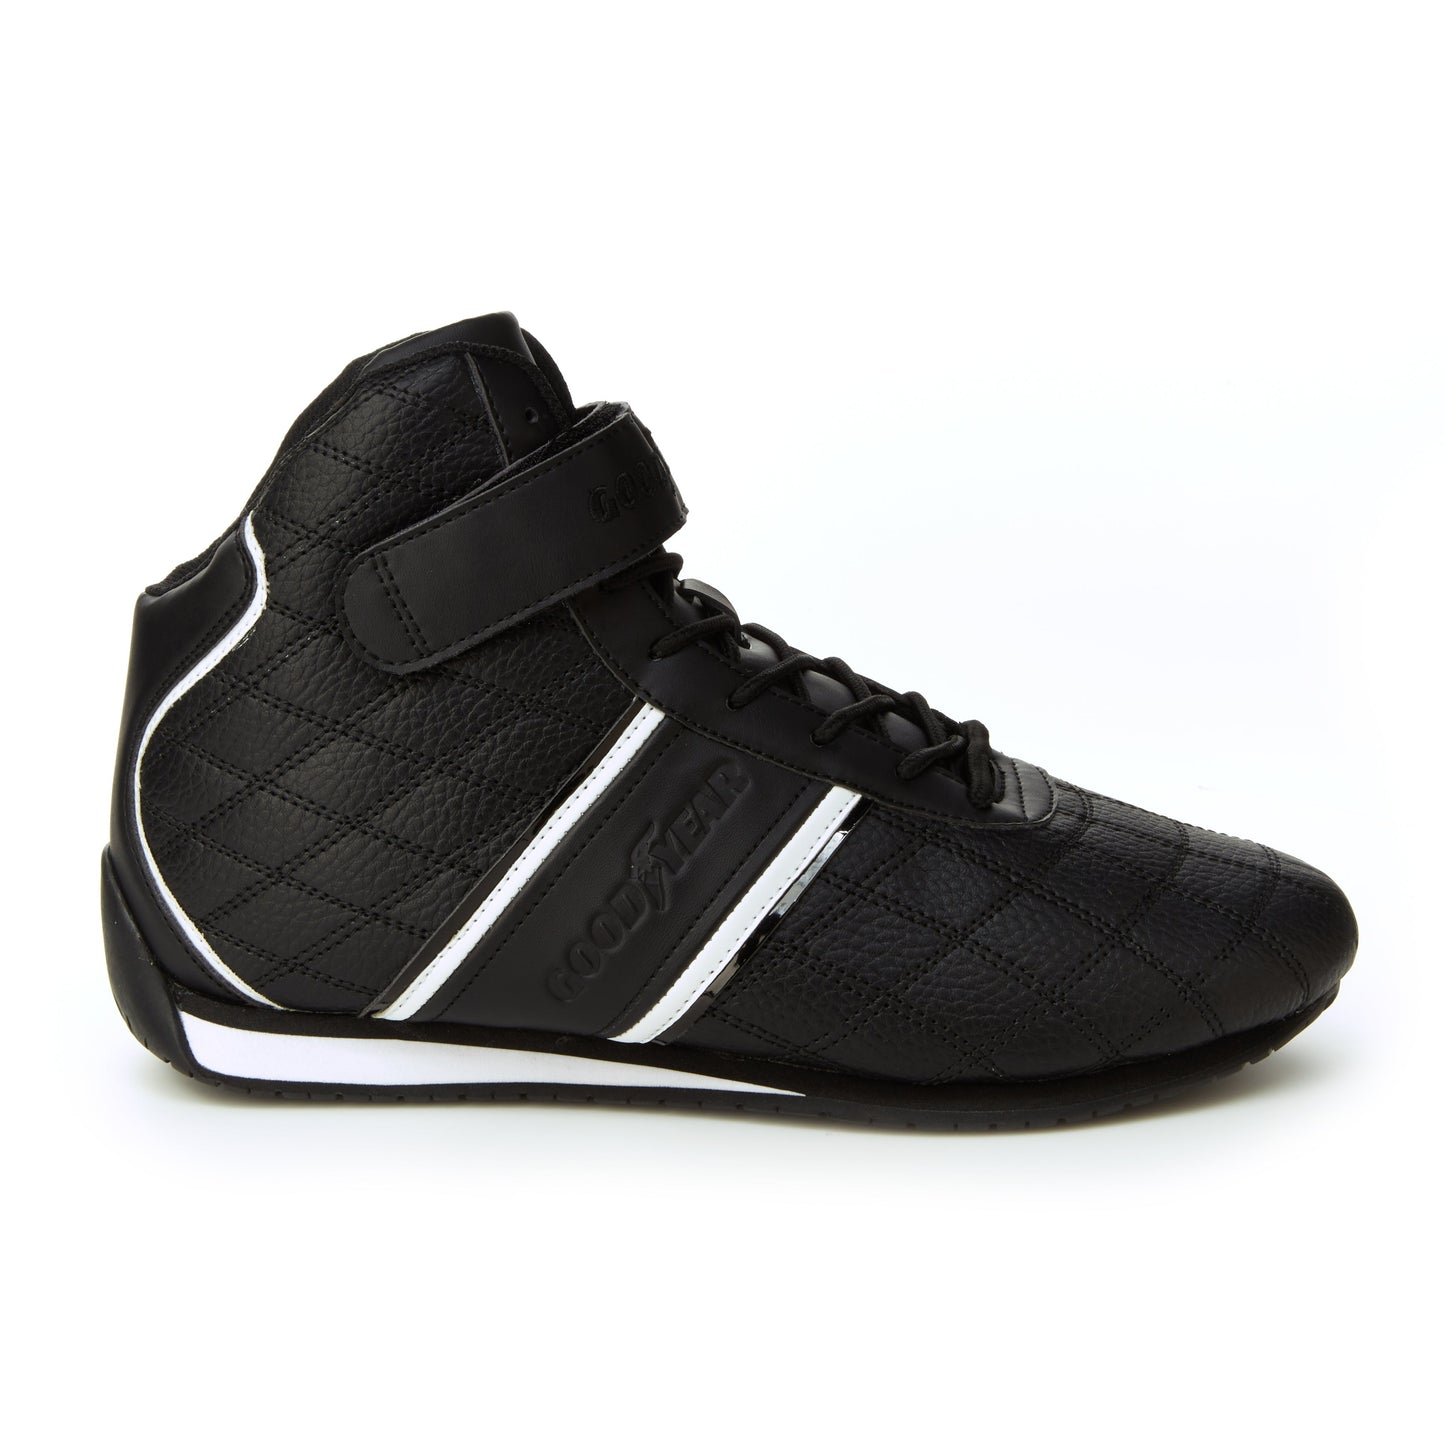 Adidas Superstar Black/White/Black Review